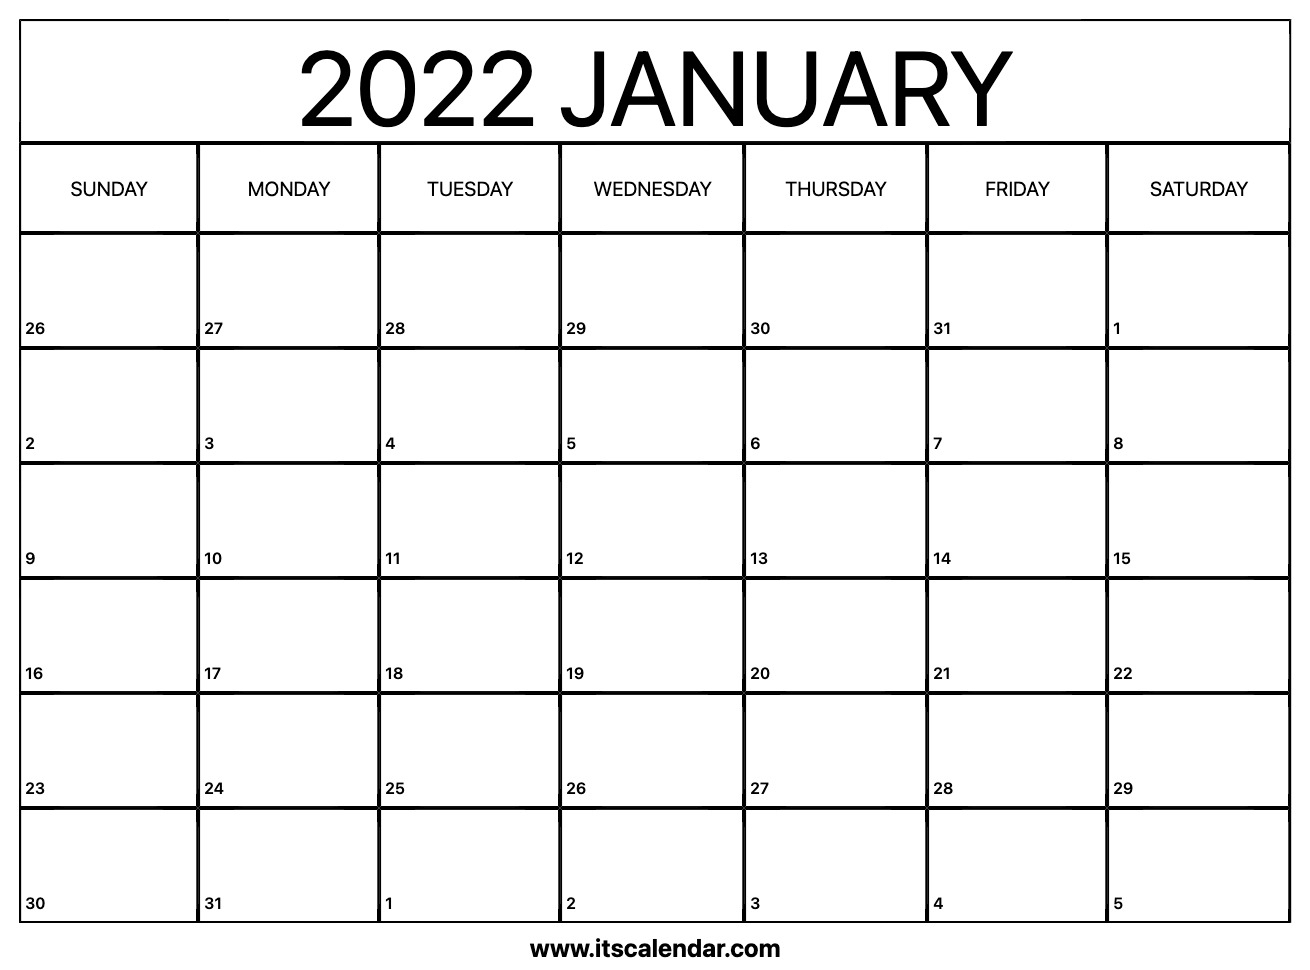 Catch Calendar 2022 January Mahina